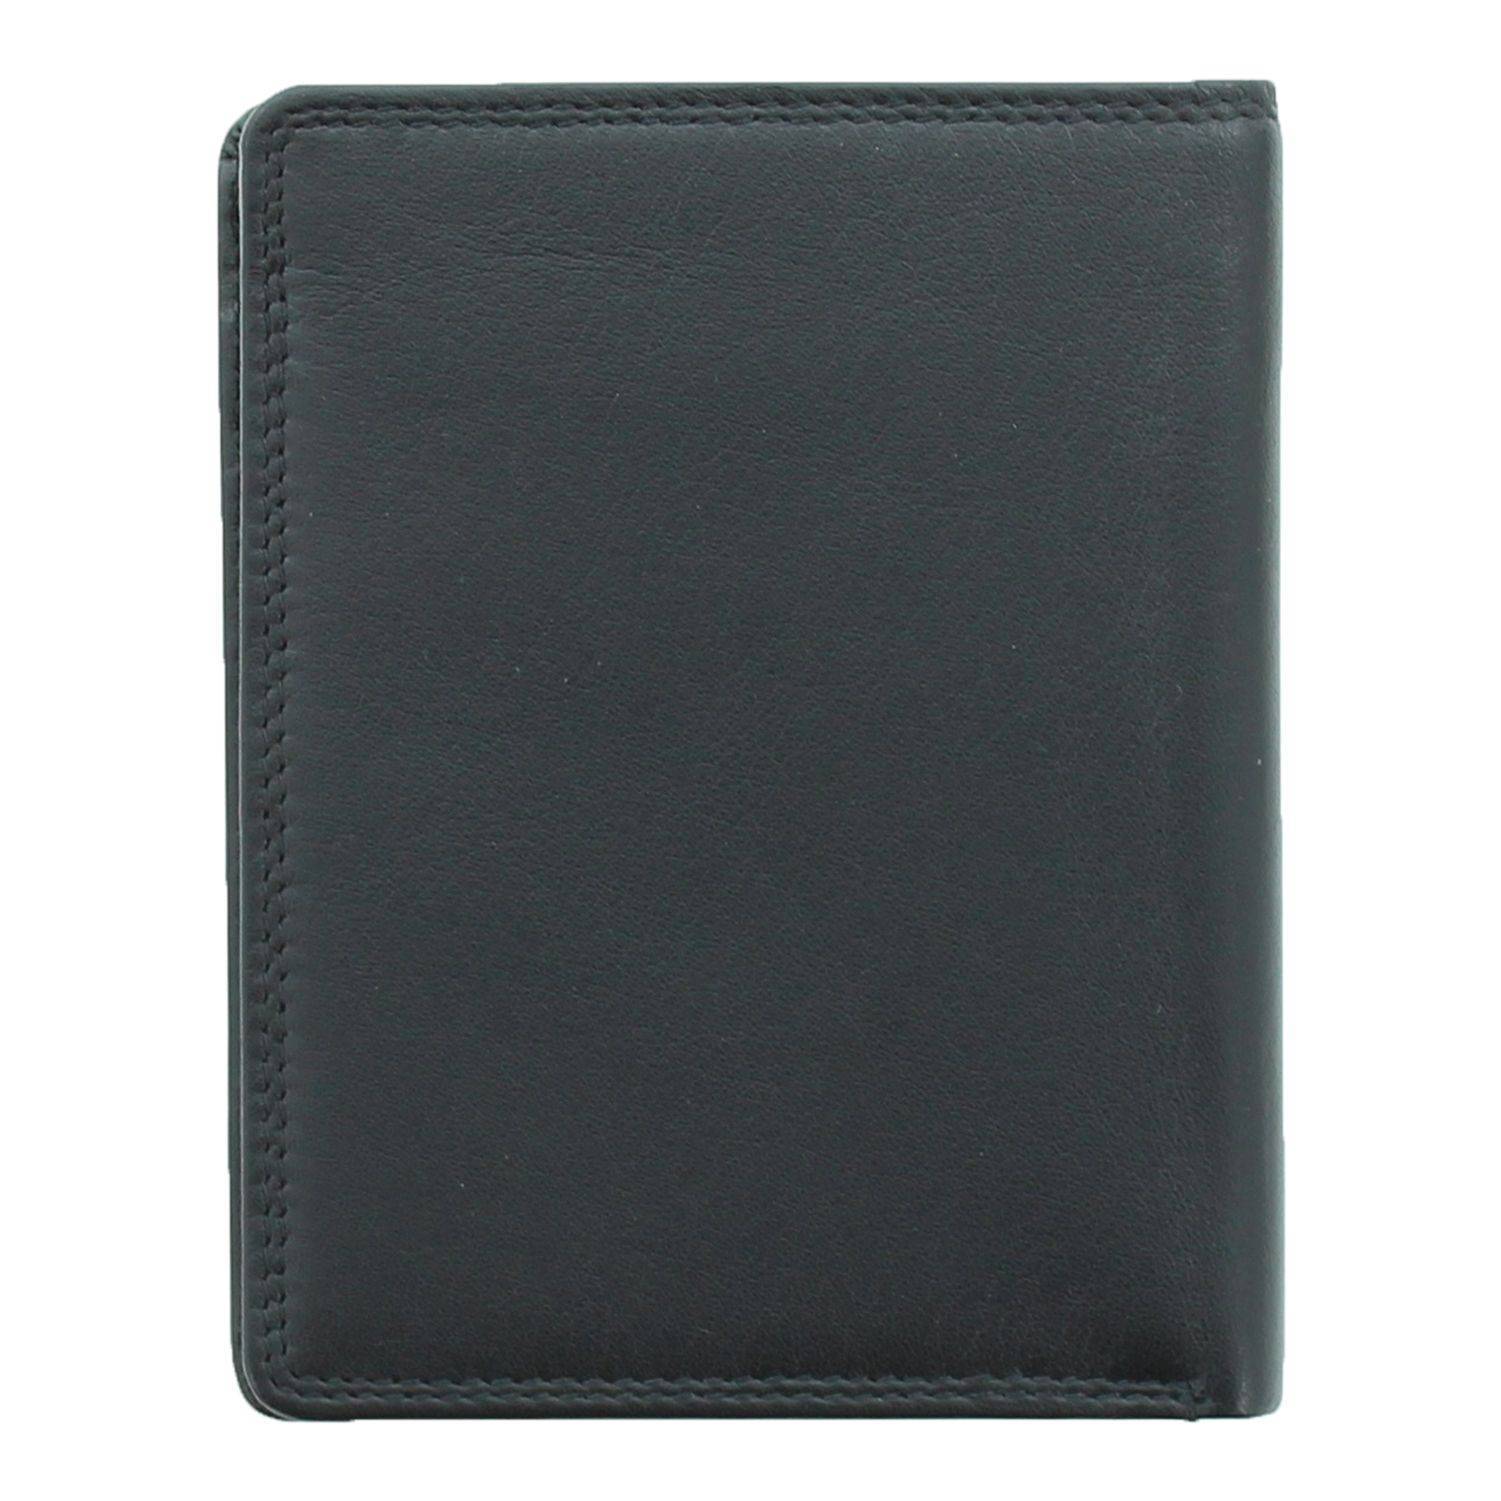 Чехол для кредитных карт Braun Buffel GOLF 2.0 ID Card Holder 4CS 90448, цвет черный, размер ONE SIZE - фото 4